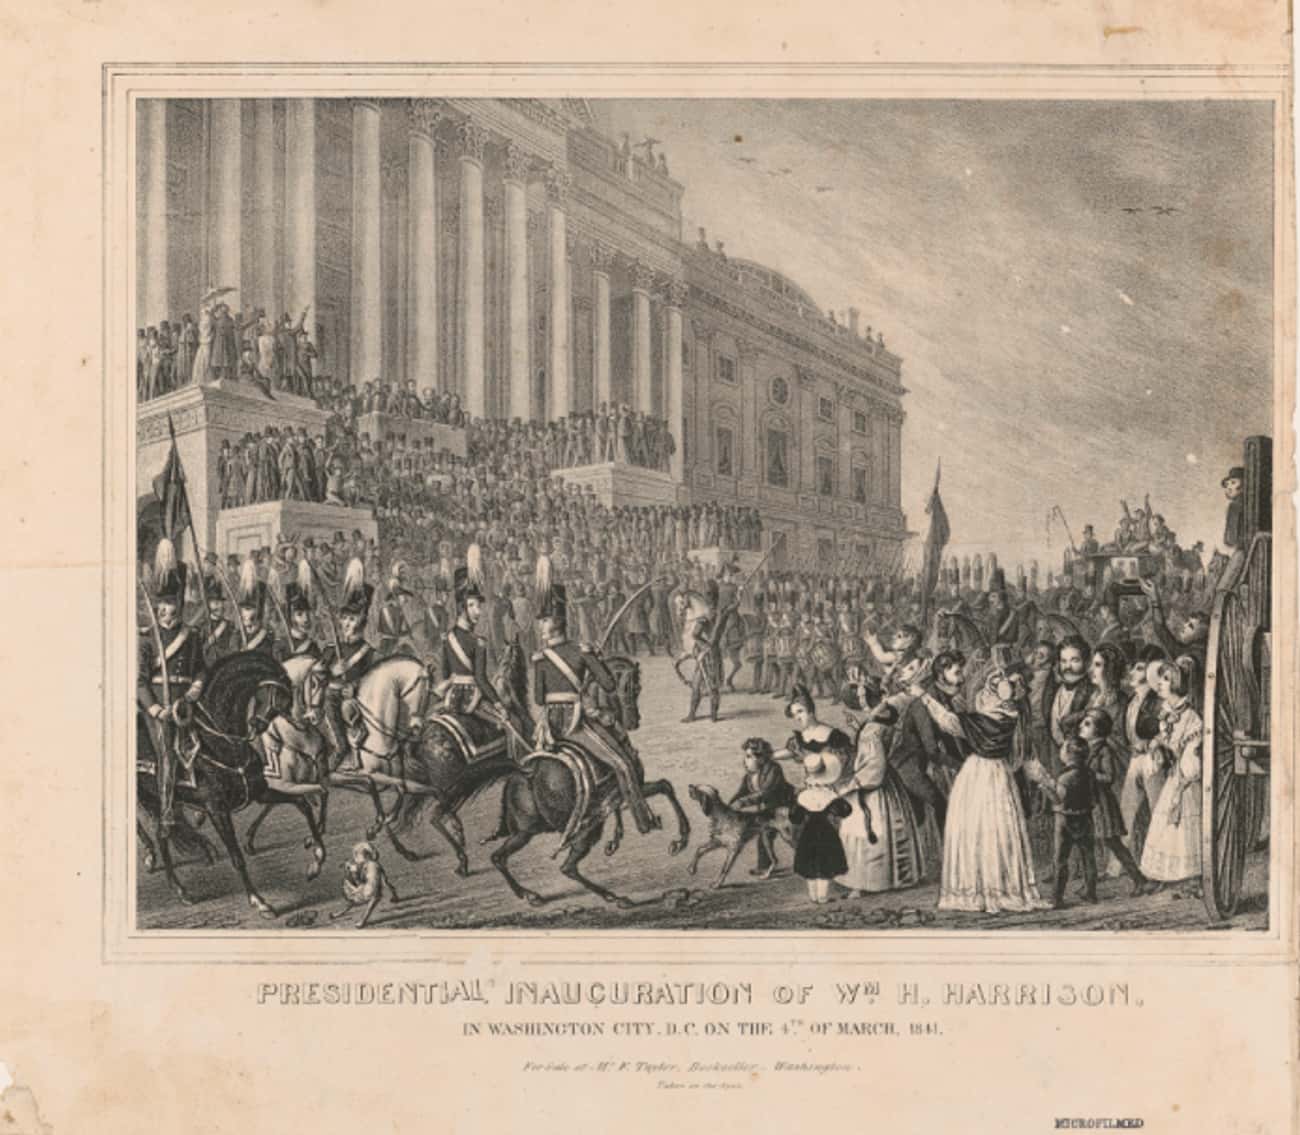 William Henry Harrison, March 4, 1841 - Washington, DC